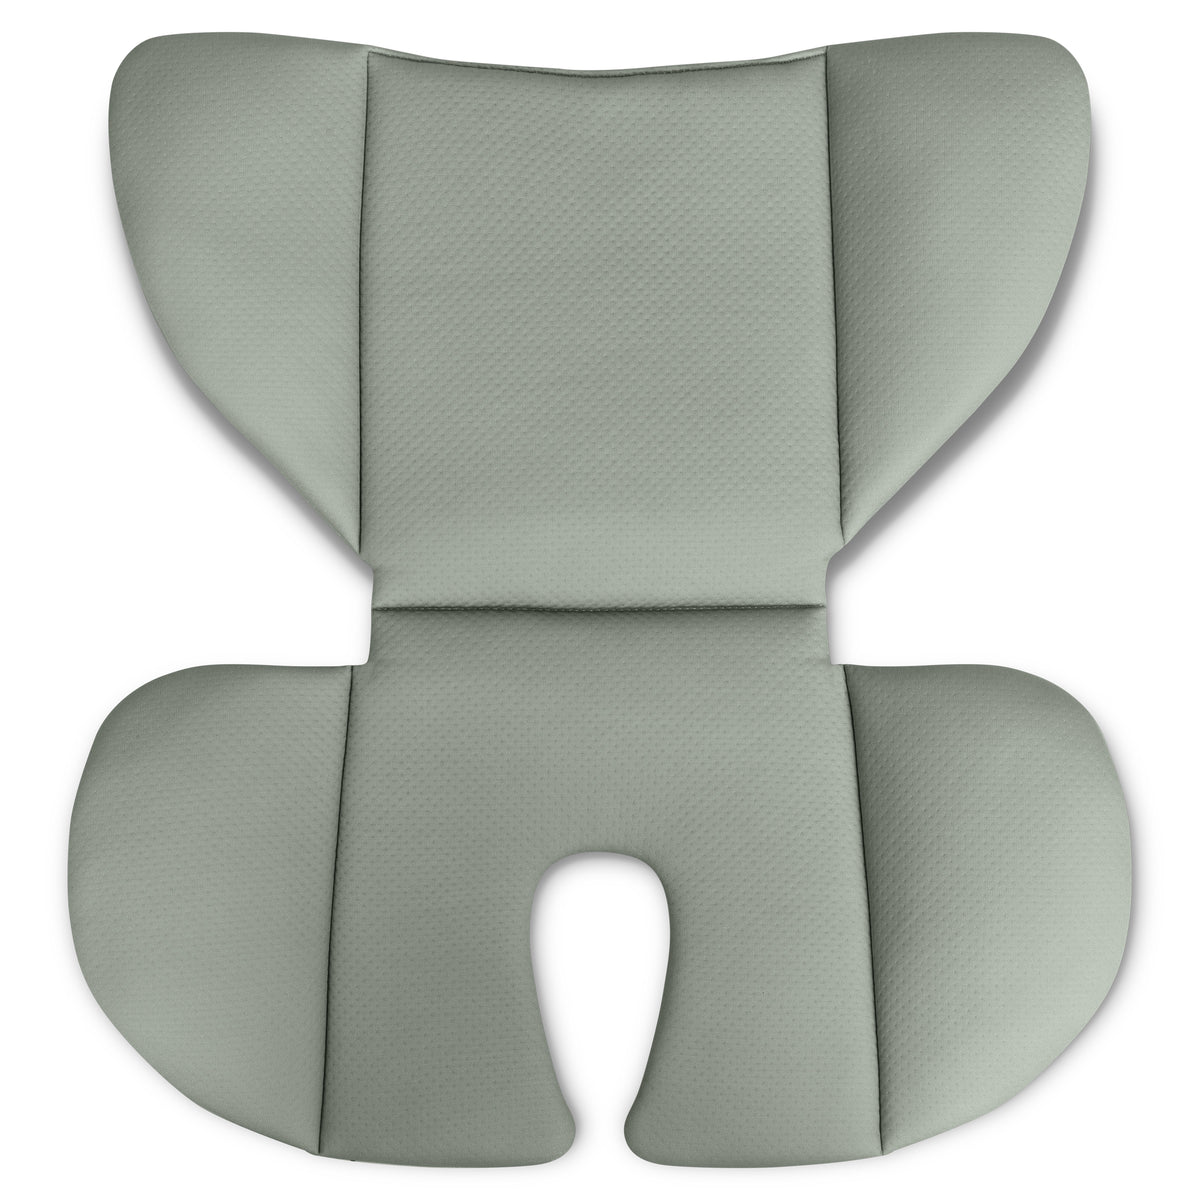 ABC Design Autositz Aspen 2 Fix i-size 2024 sage